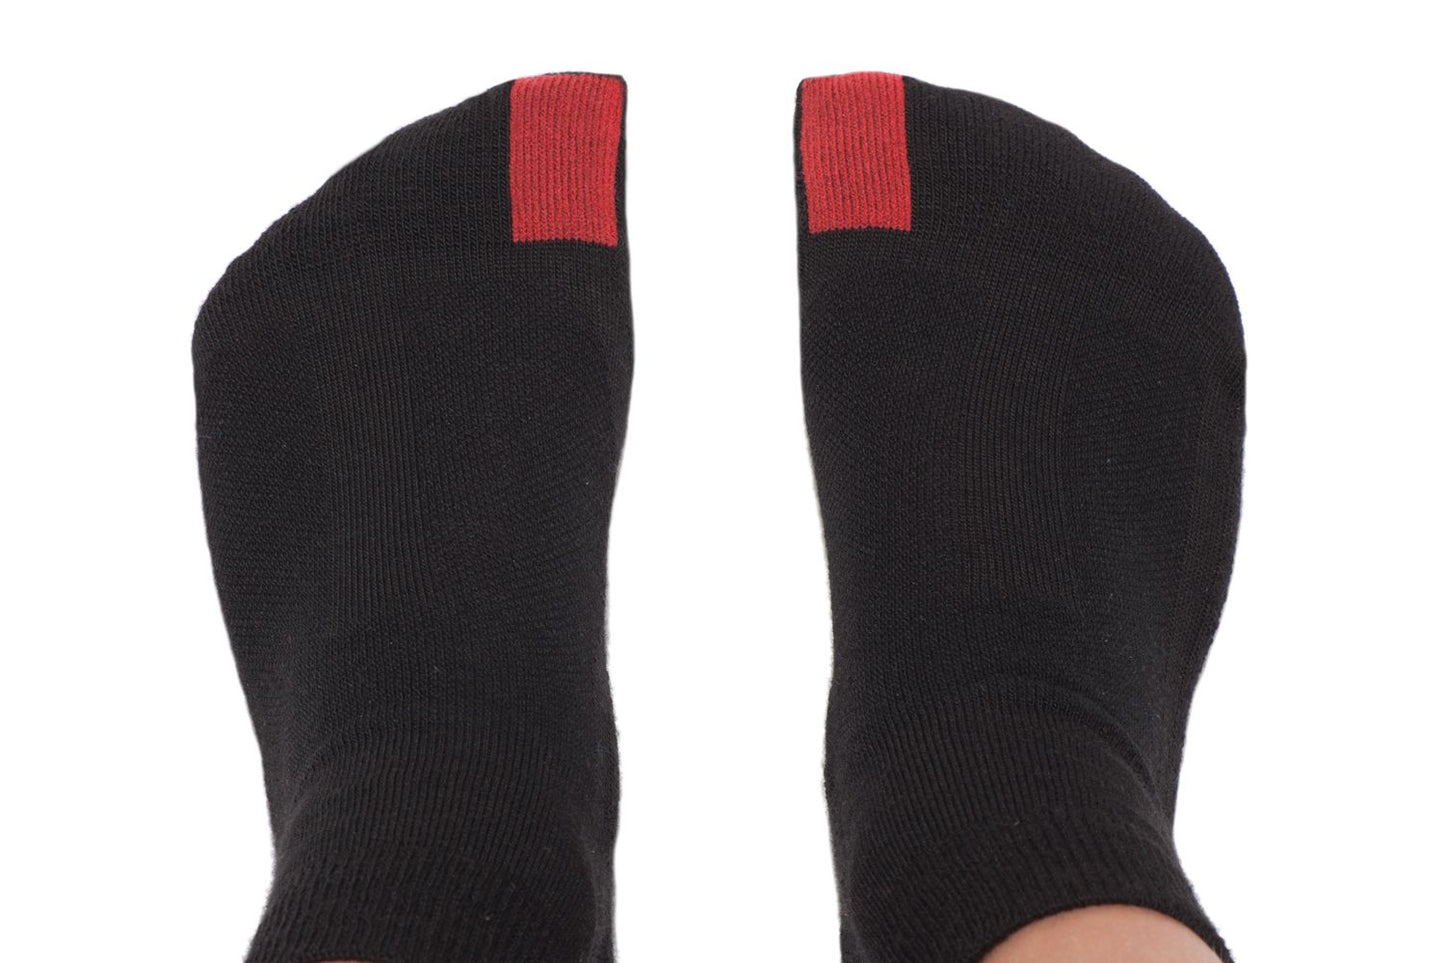 Plus12 - Calcetines barefoot cortos - Algodón - Negro